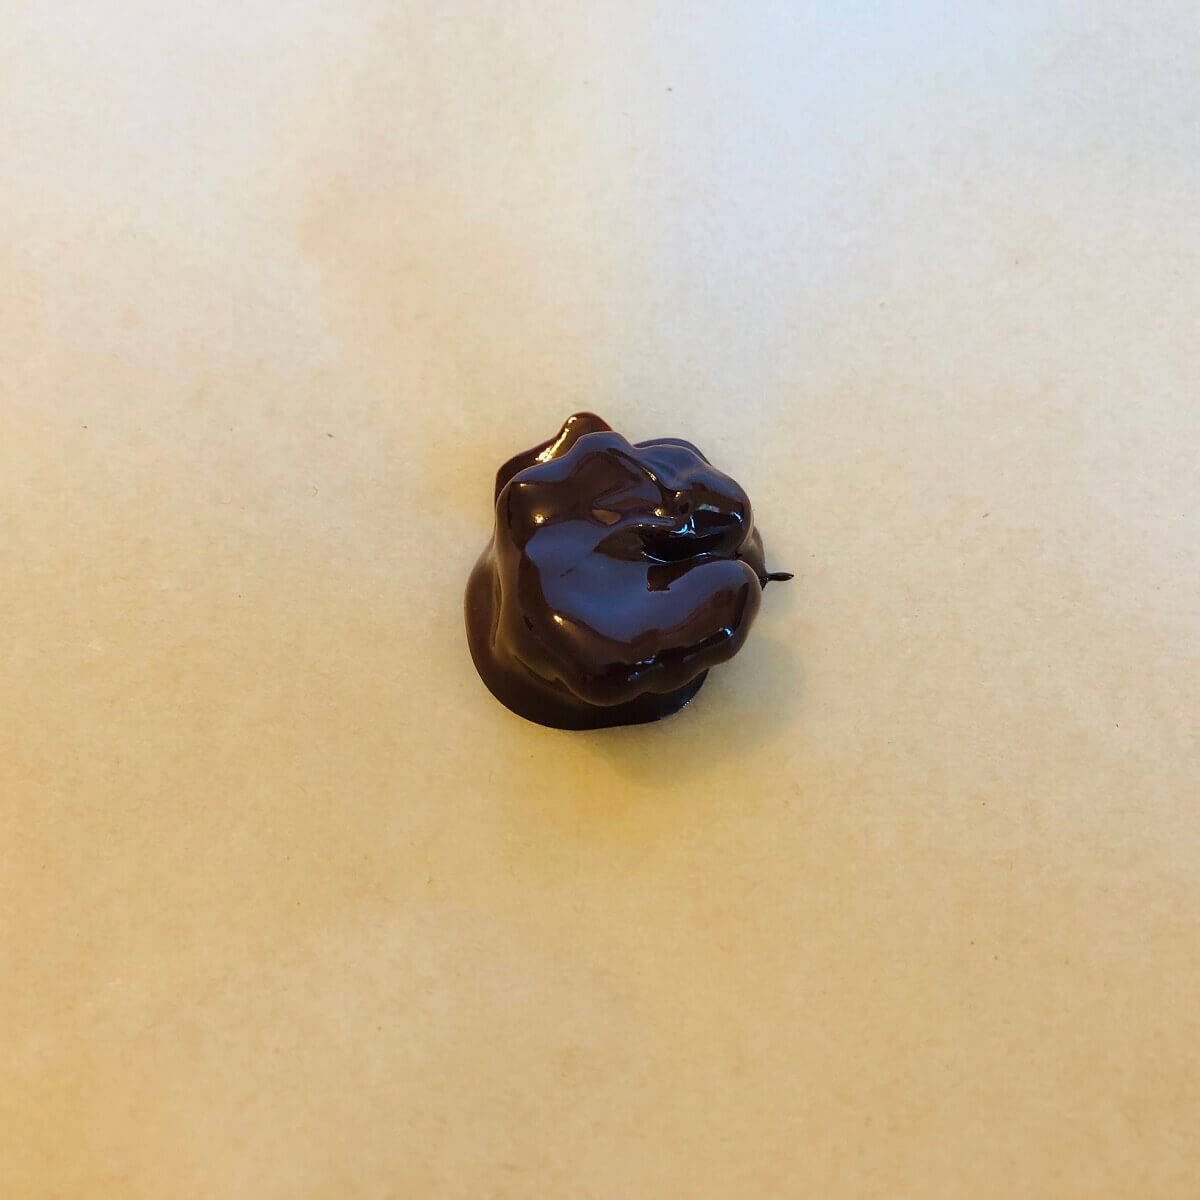 A walnut half coated in melted dark chocolate.